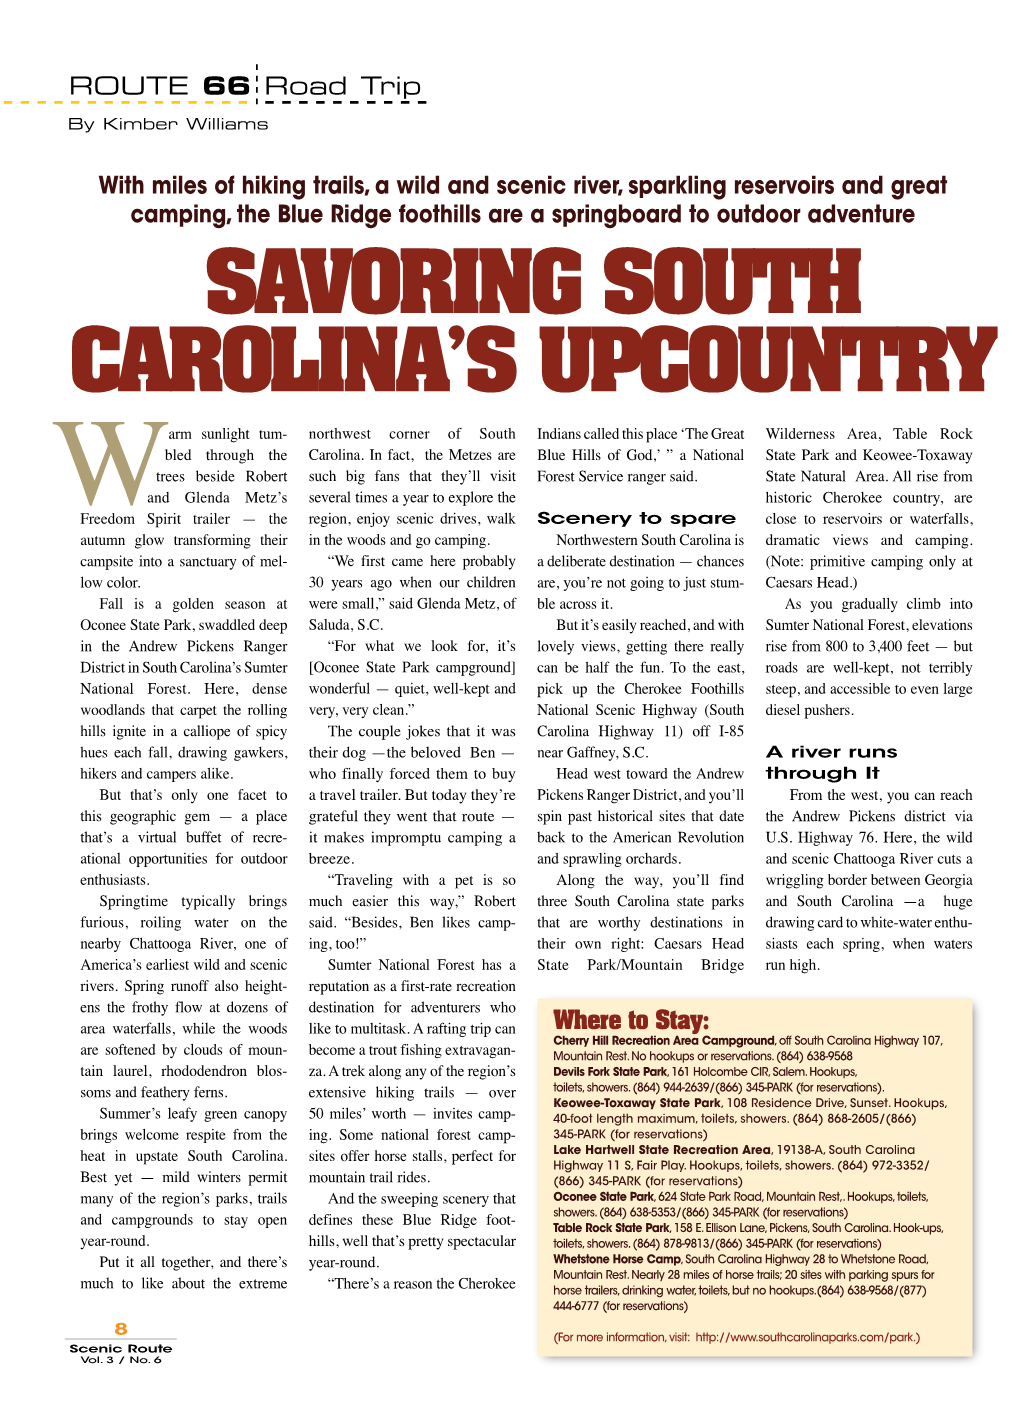 Savoring South Carolina's Upcountry